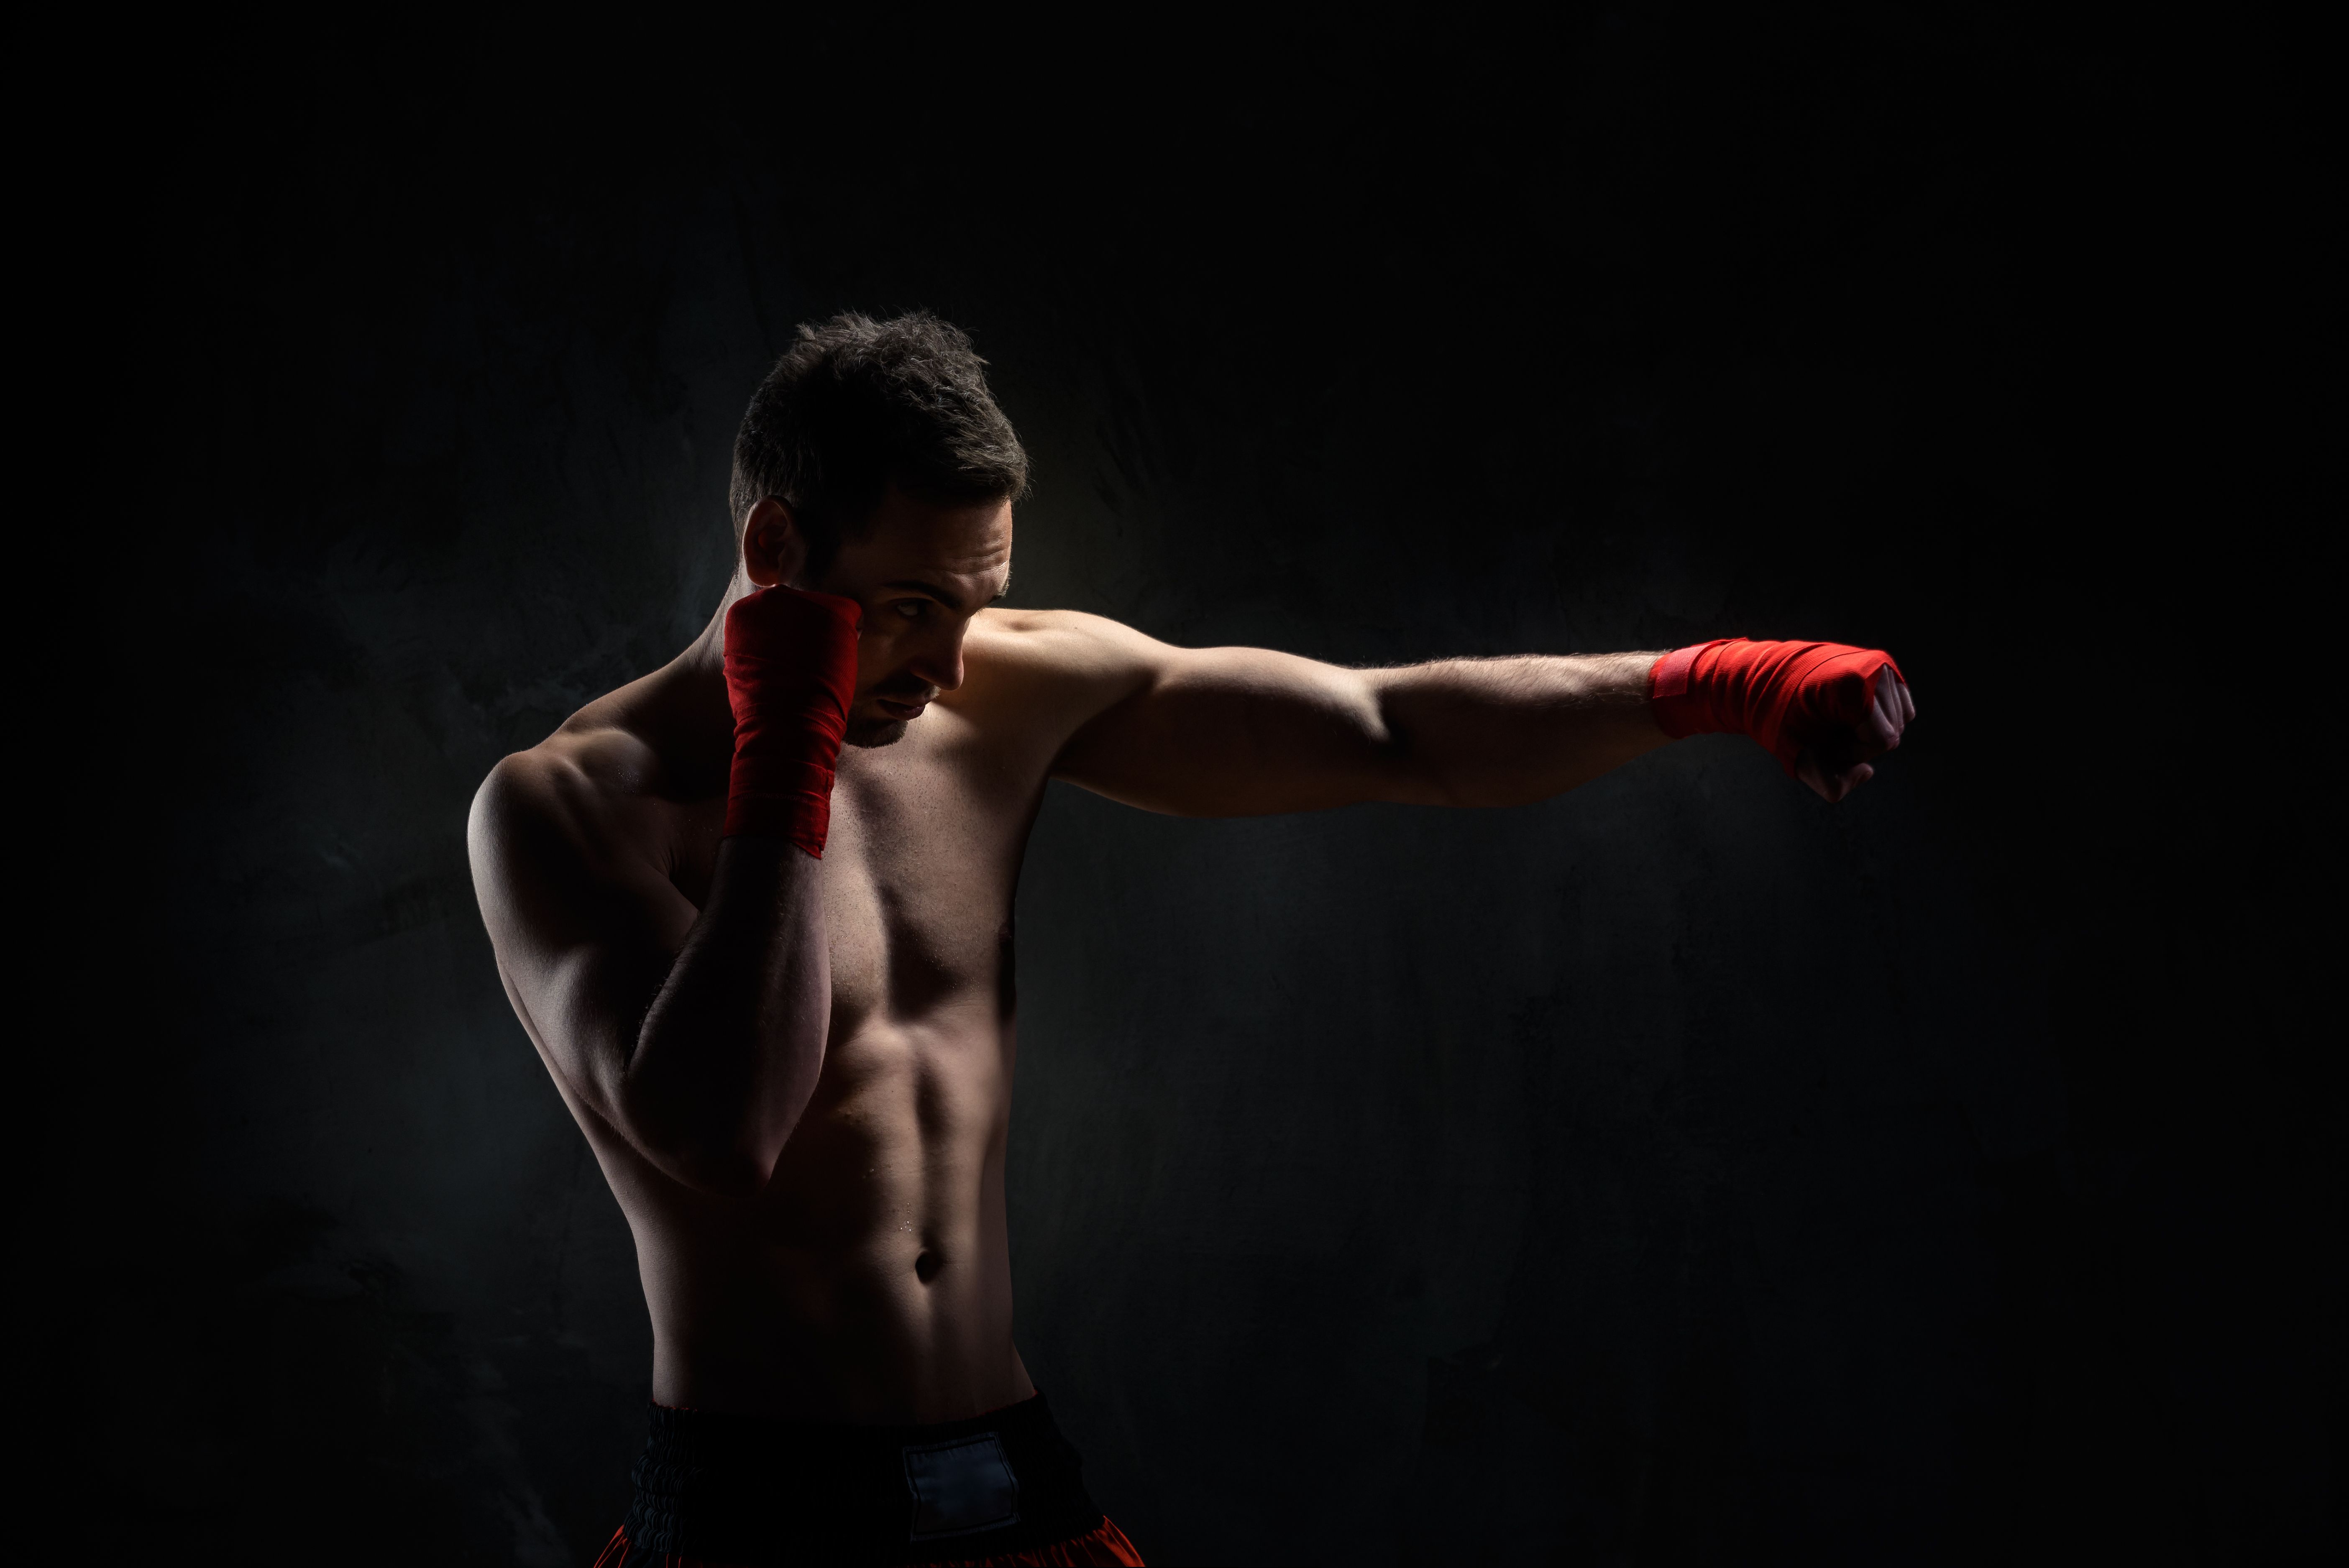 Kickboxing, Boxing, Fitness Training and Mixed Martial Arts (MMA)